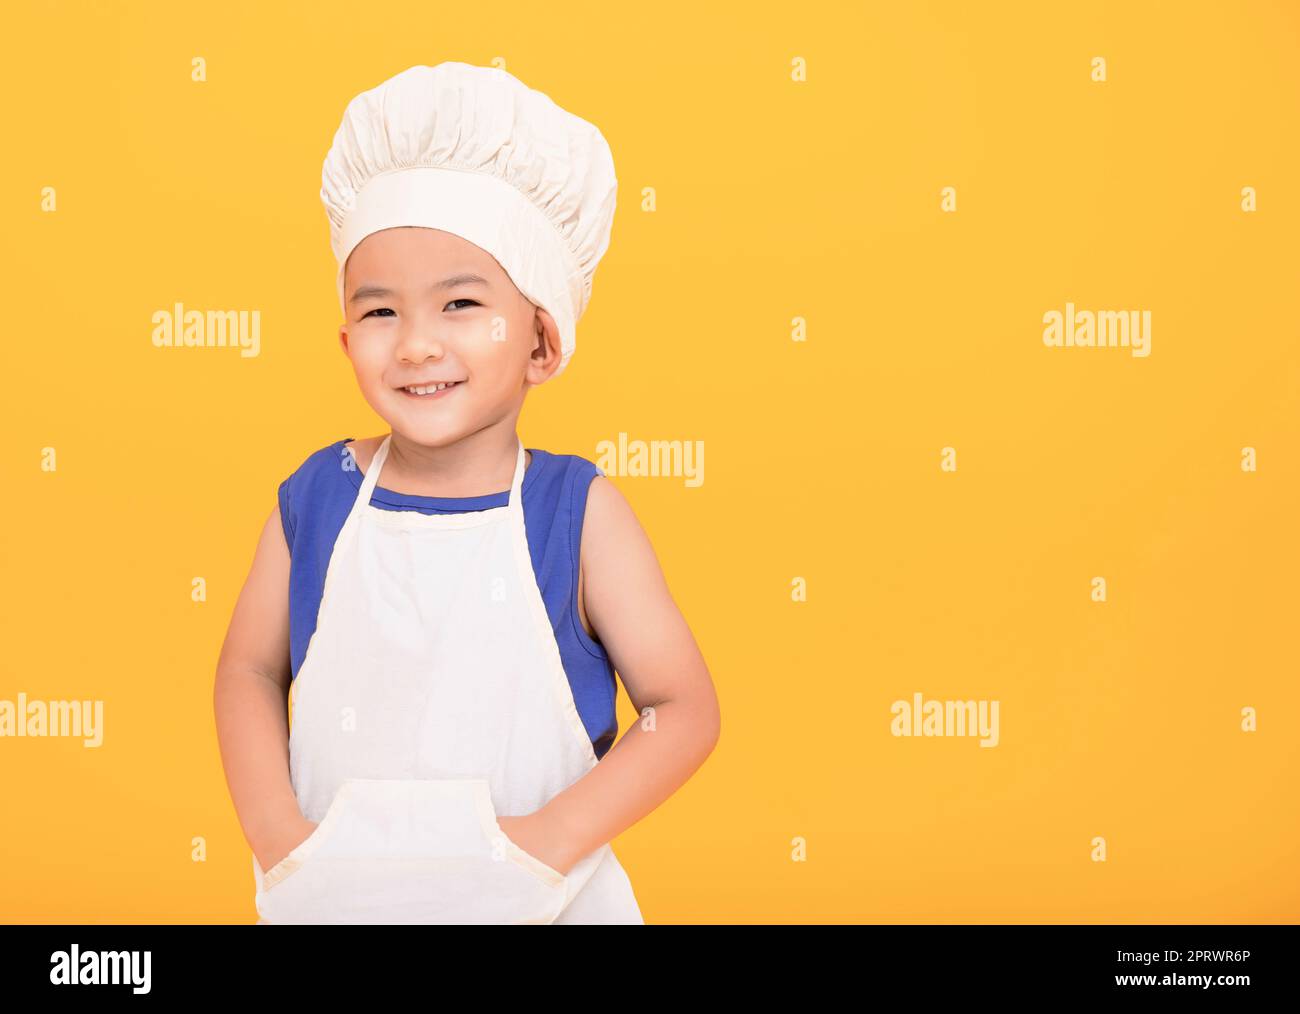 Happy boy in chef uniform on yellow background Stock Photo